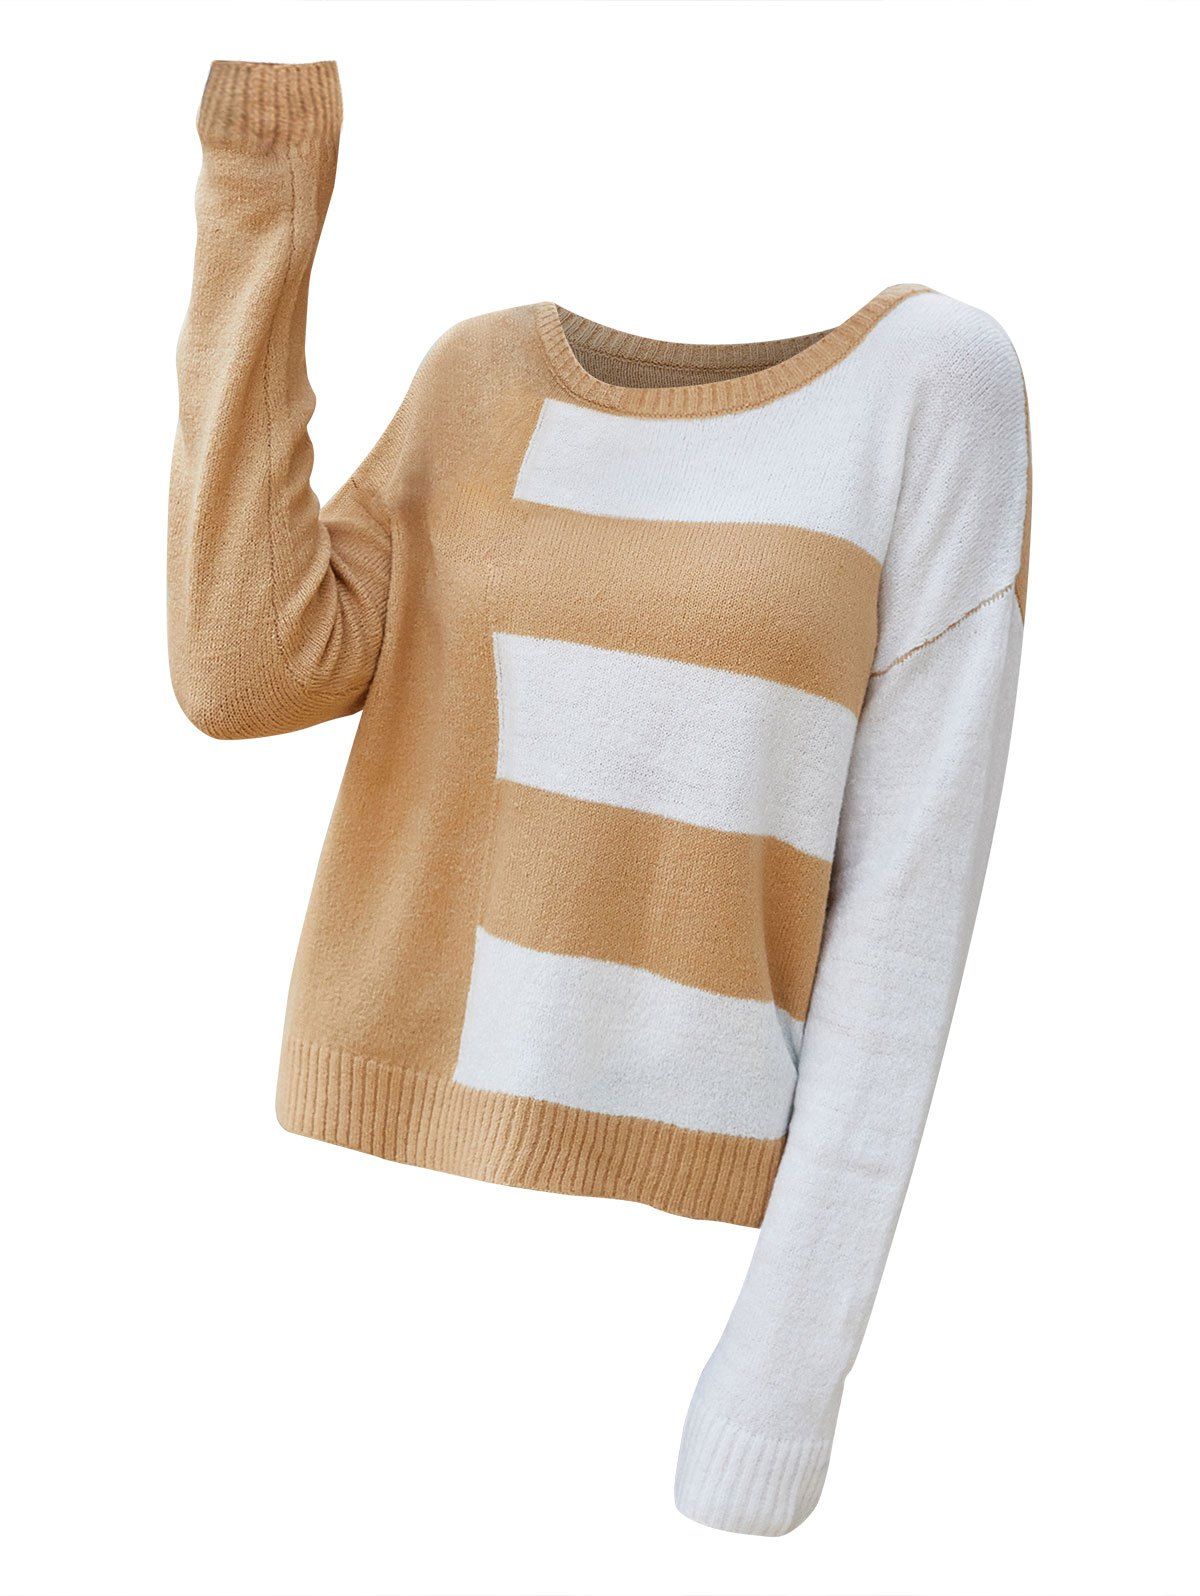 Colorblock Drop Shoulder Sweater - LIGHT COFFEE M